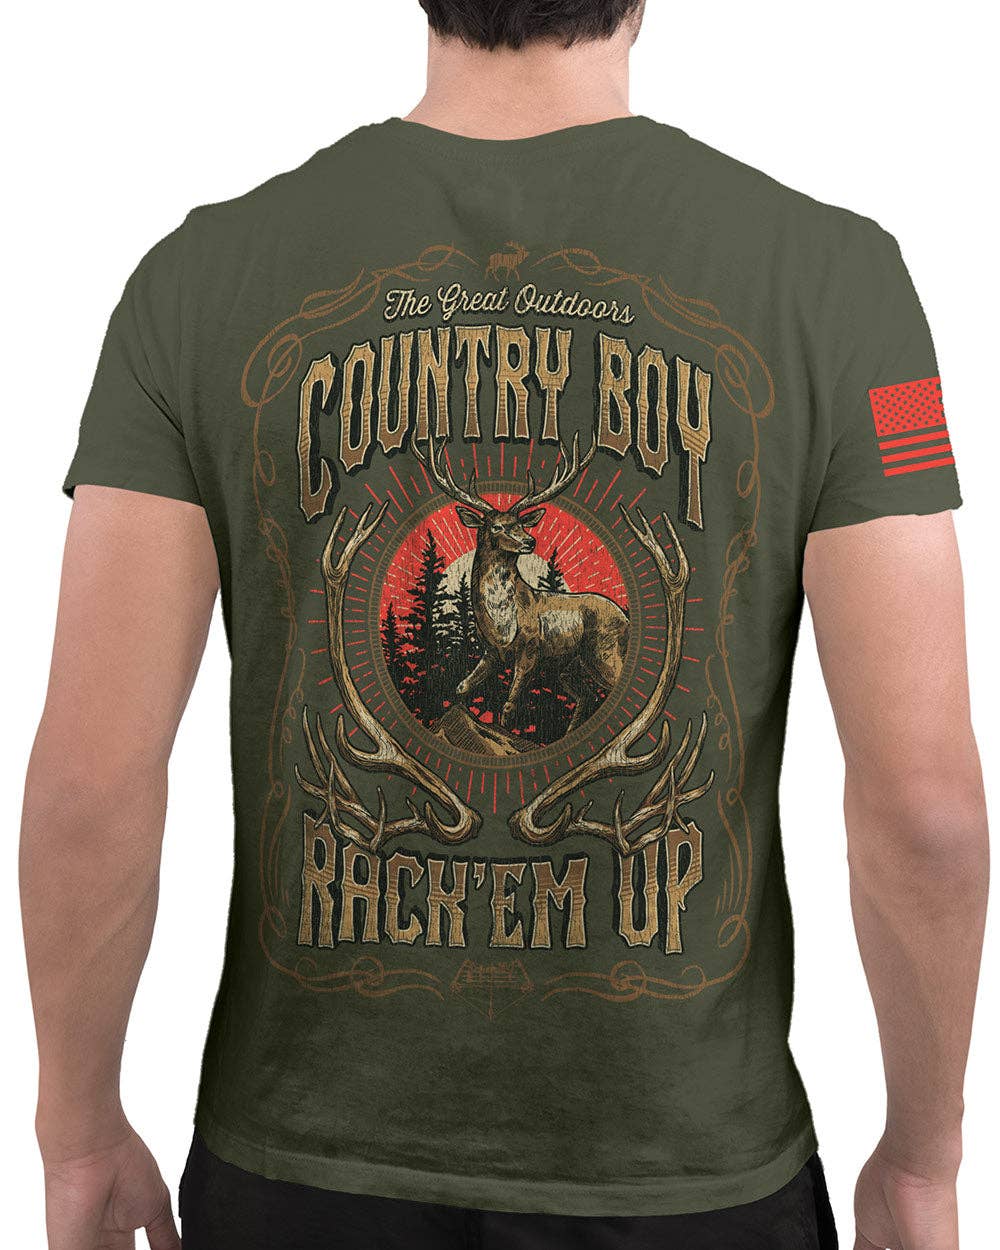 Country Boy® Men's Cotton Tee Rack Em Up